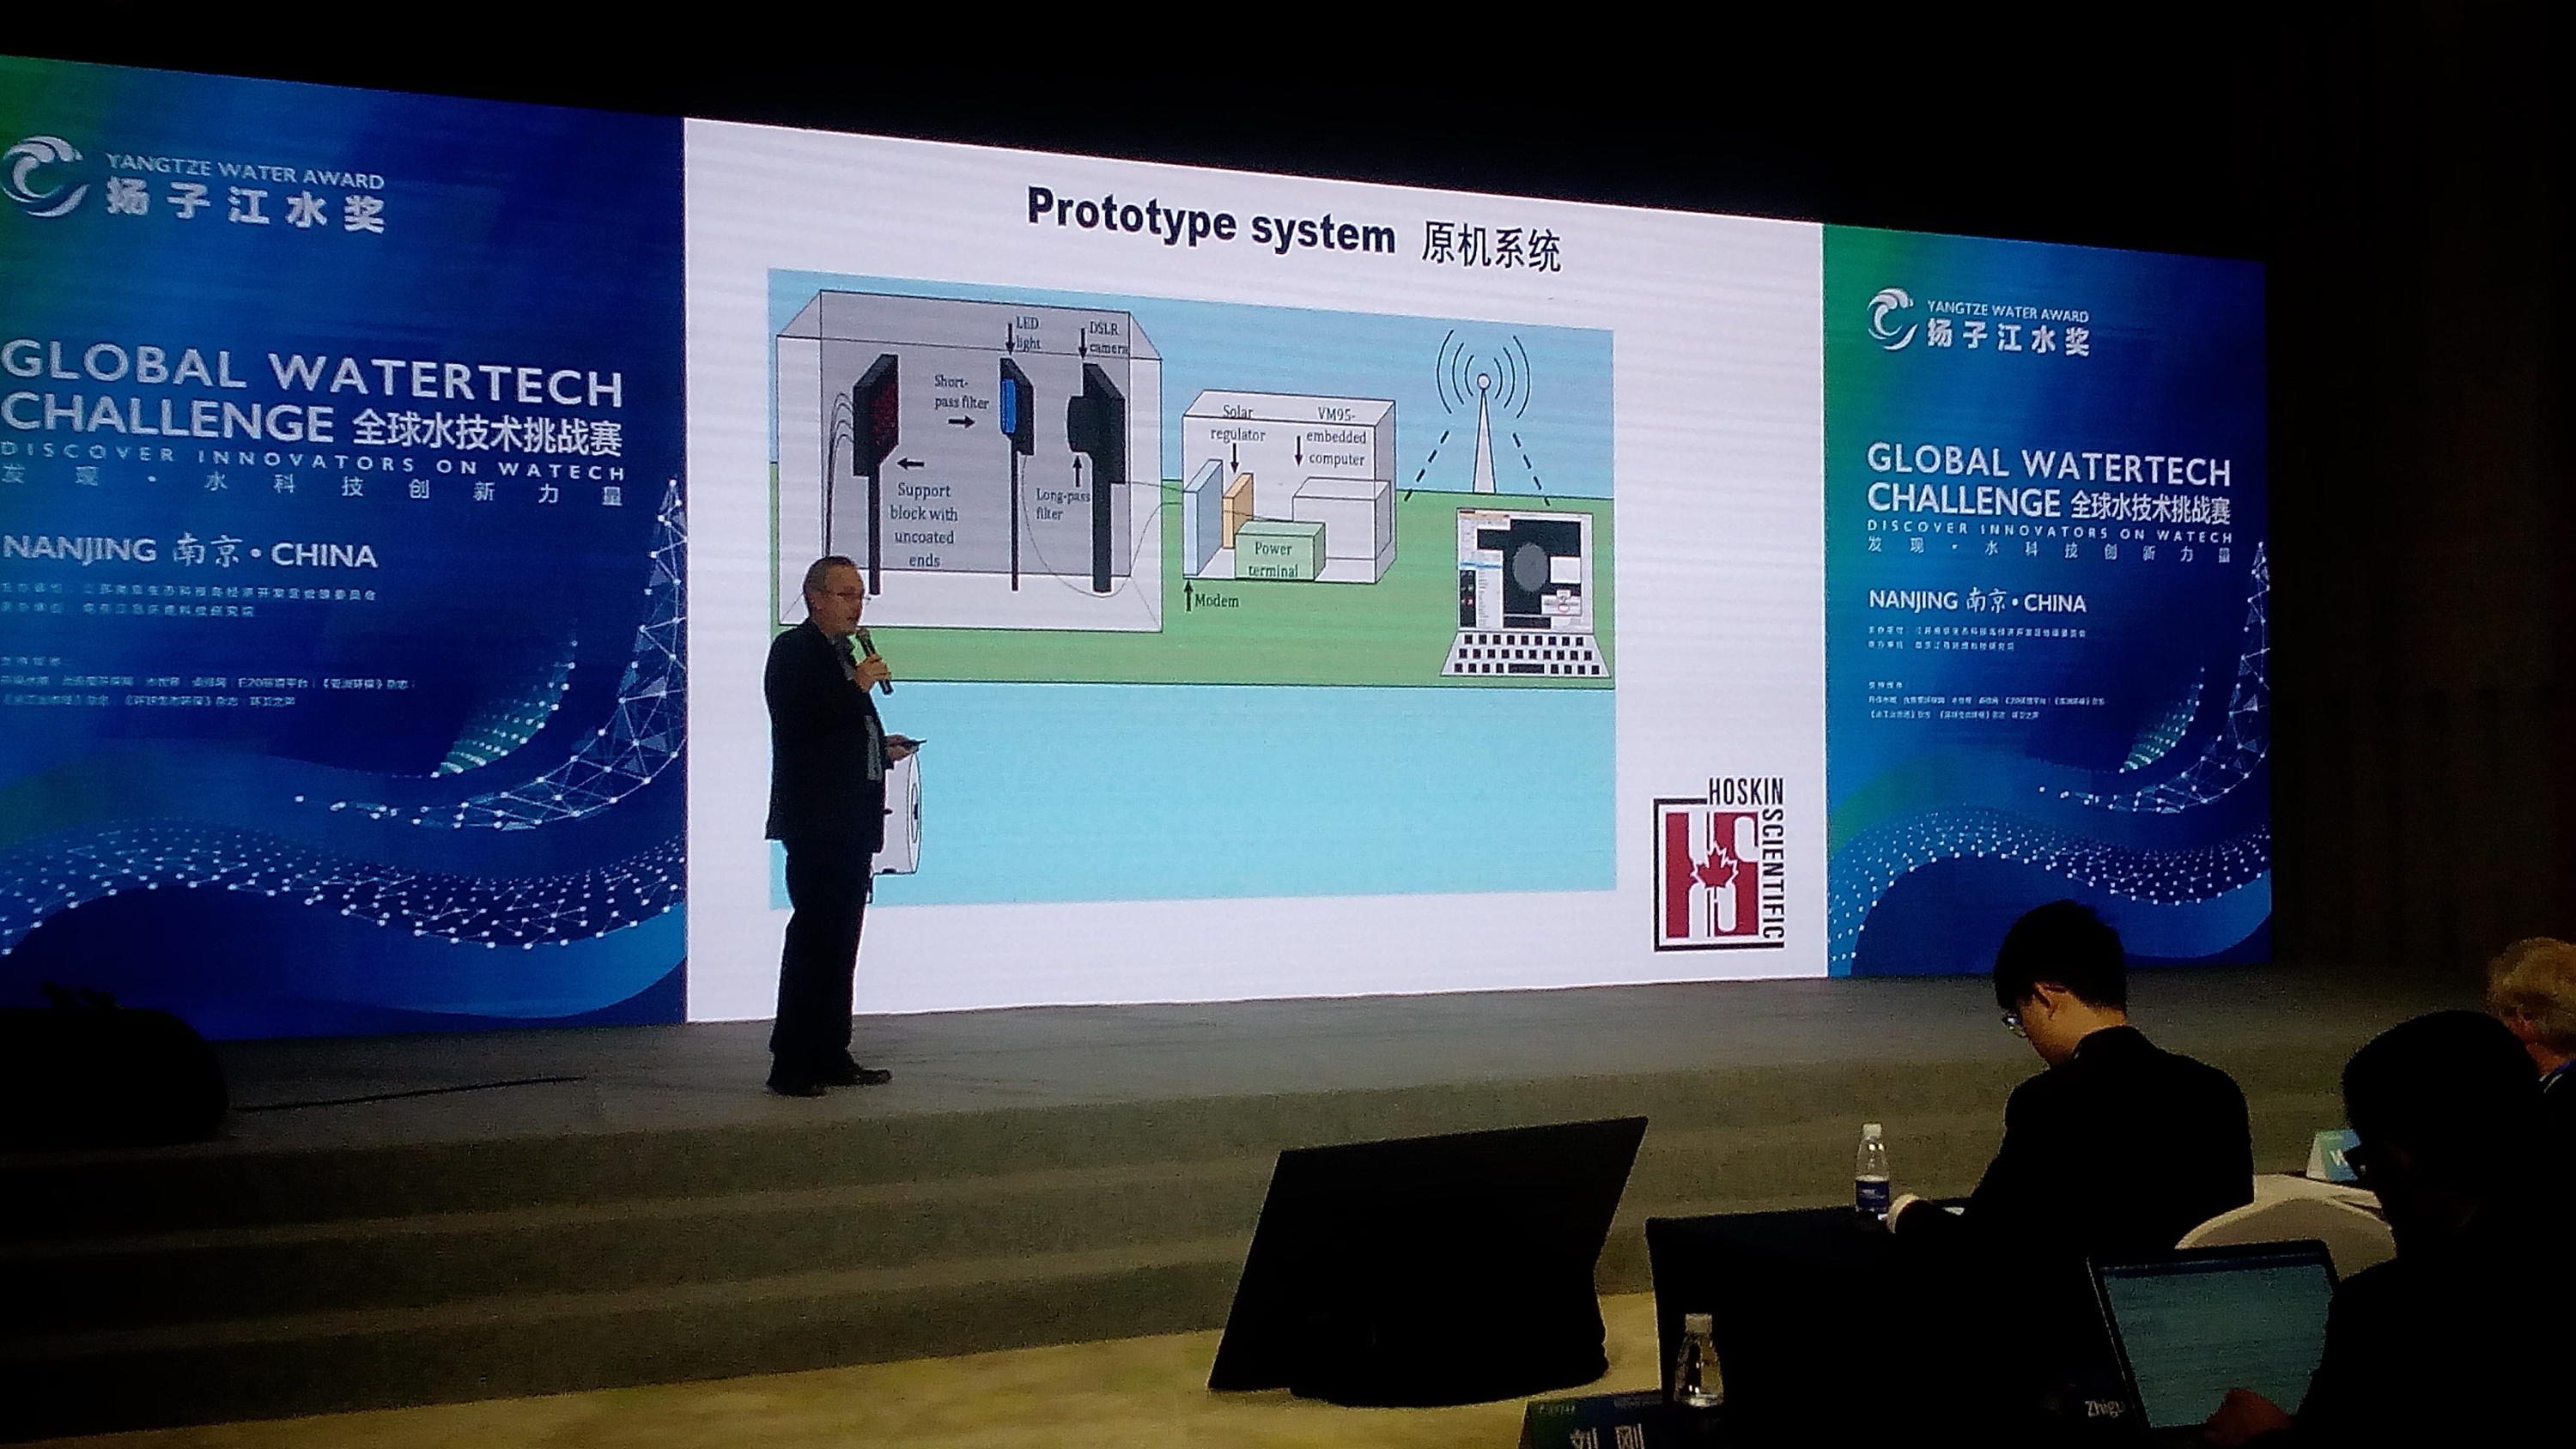 Philippe Van Cappellen presents at the Global WaterTech Challenge in Nanjing, China